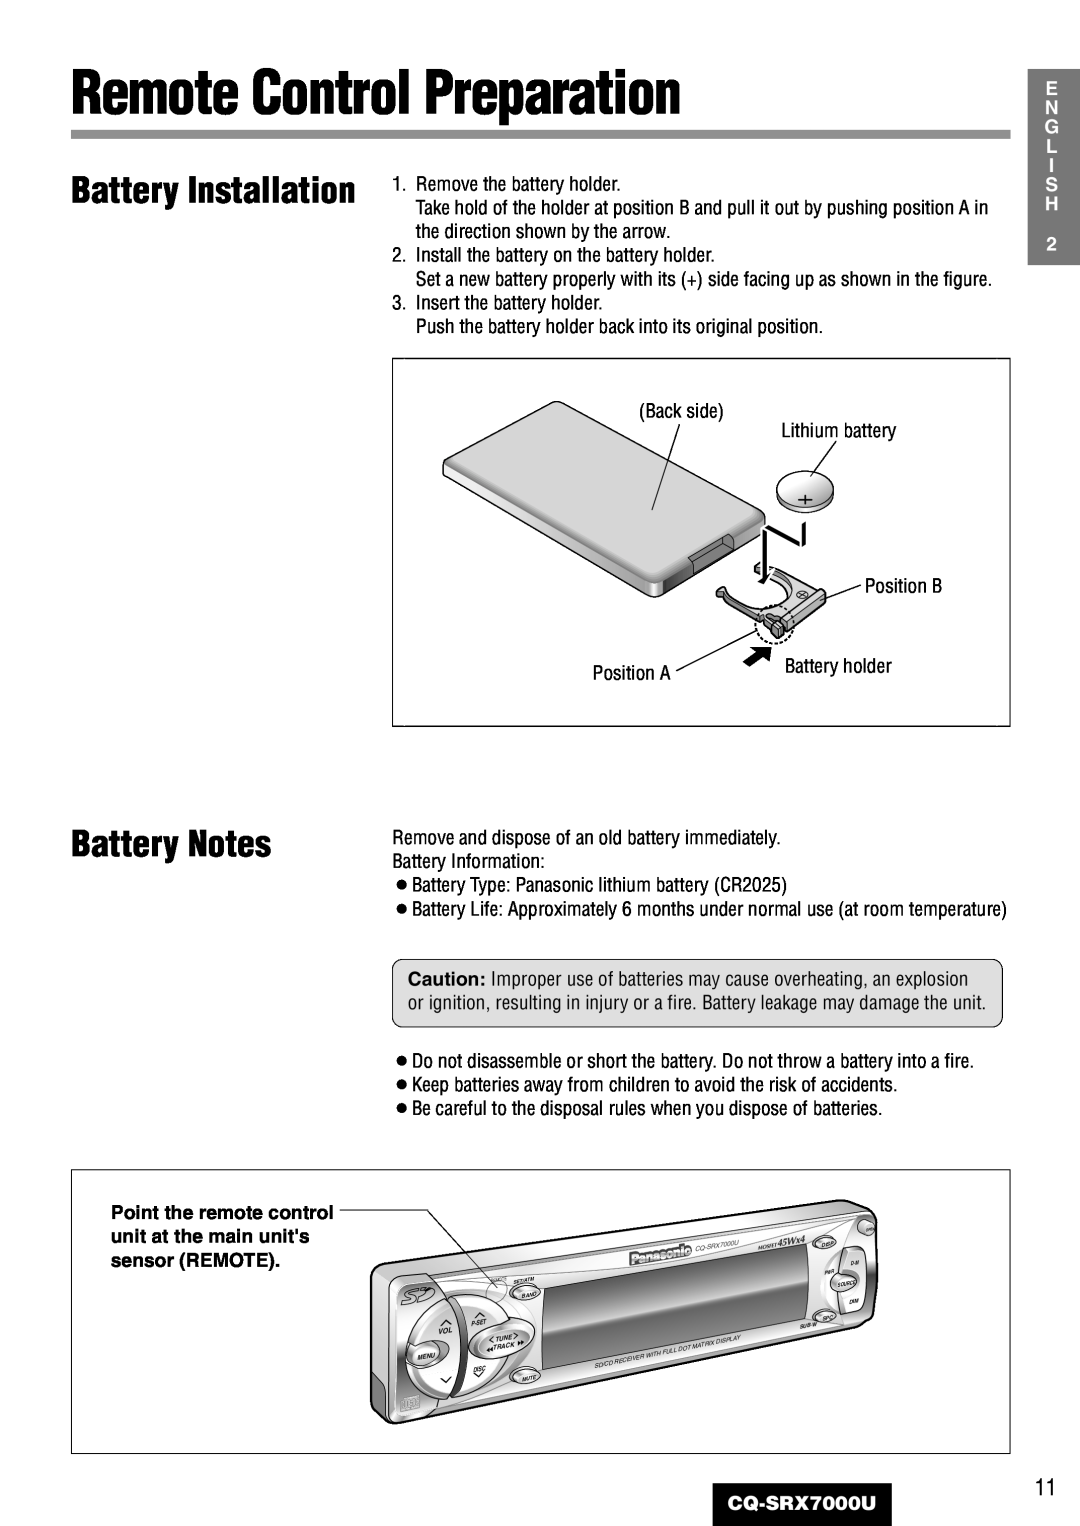 Panasonic CQ-SRX7000U manual Remote Control Preparation, Battery Notes, Battery Installation 